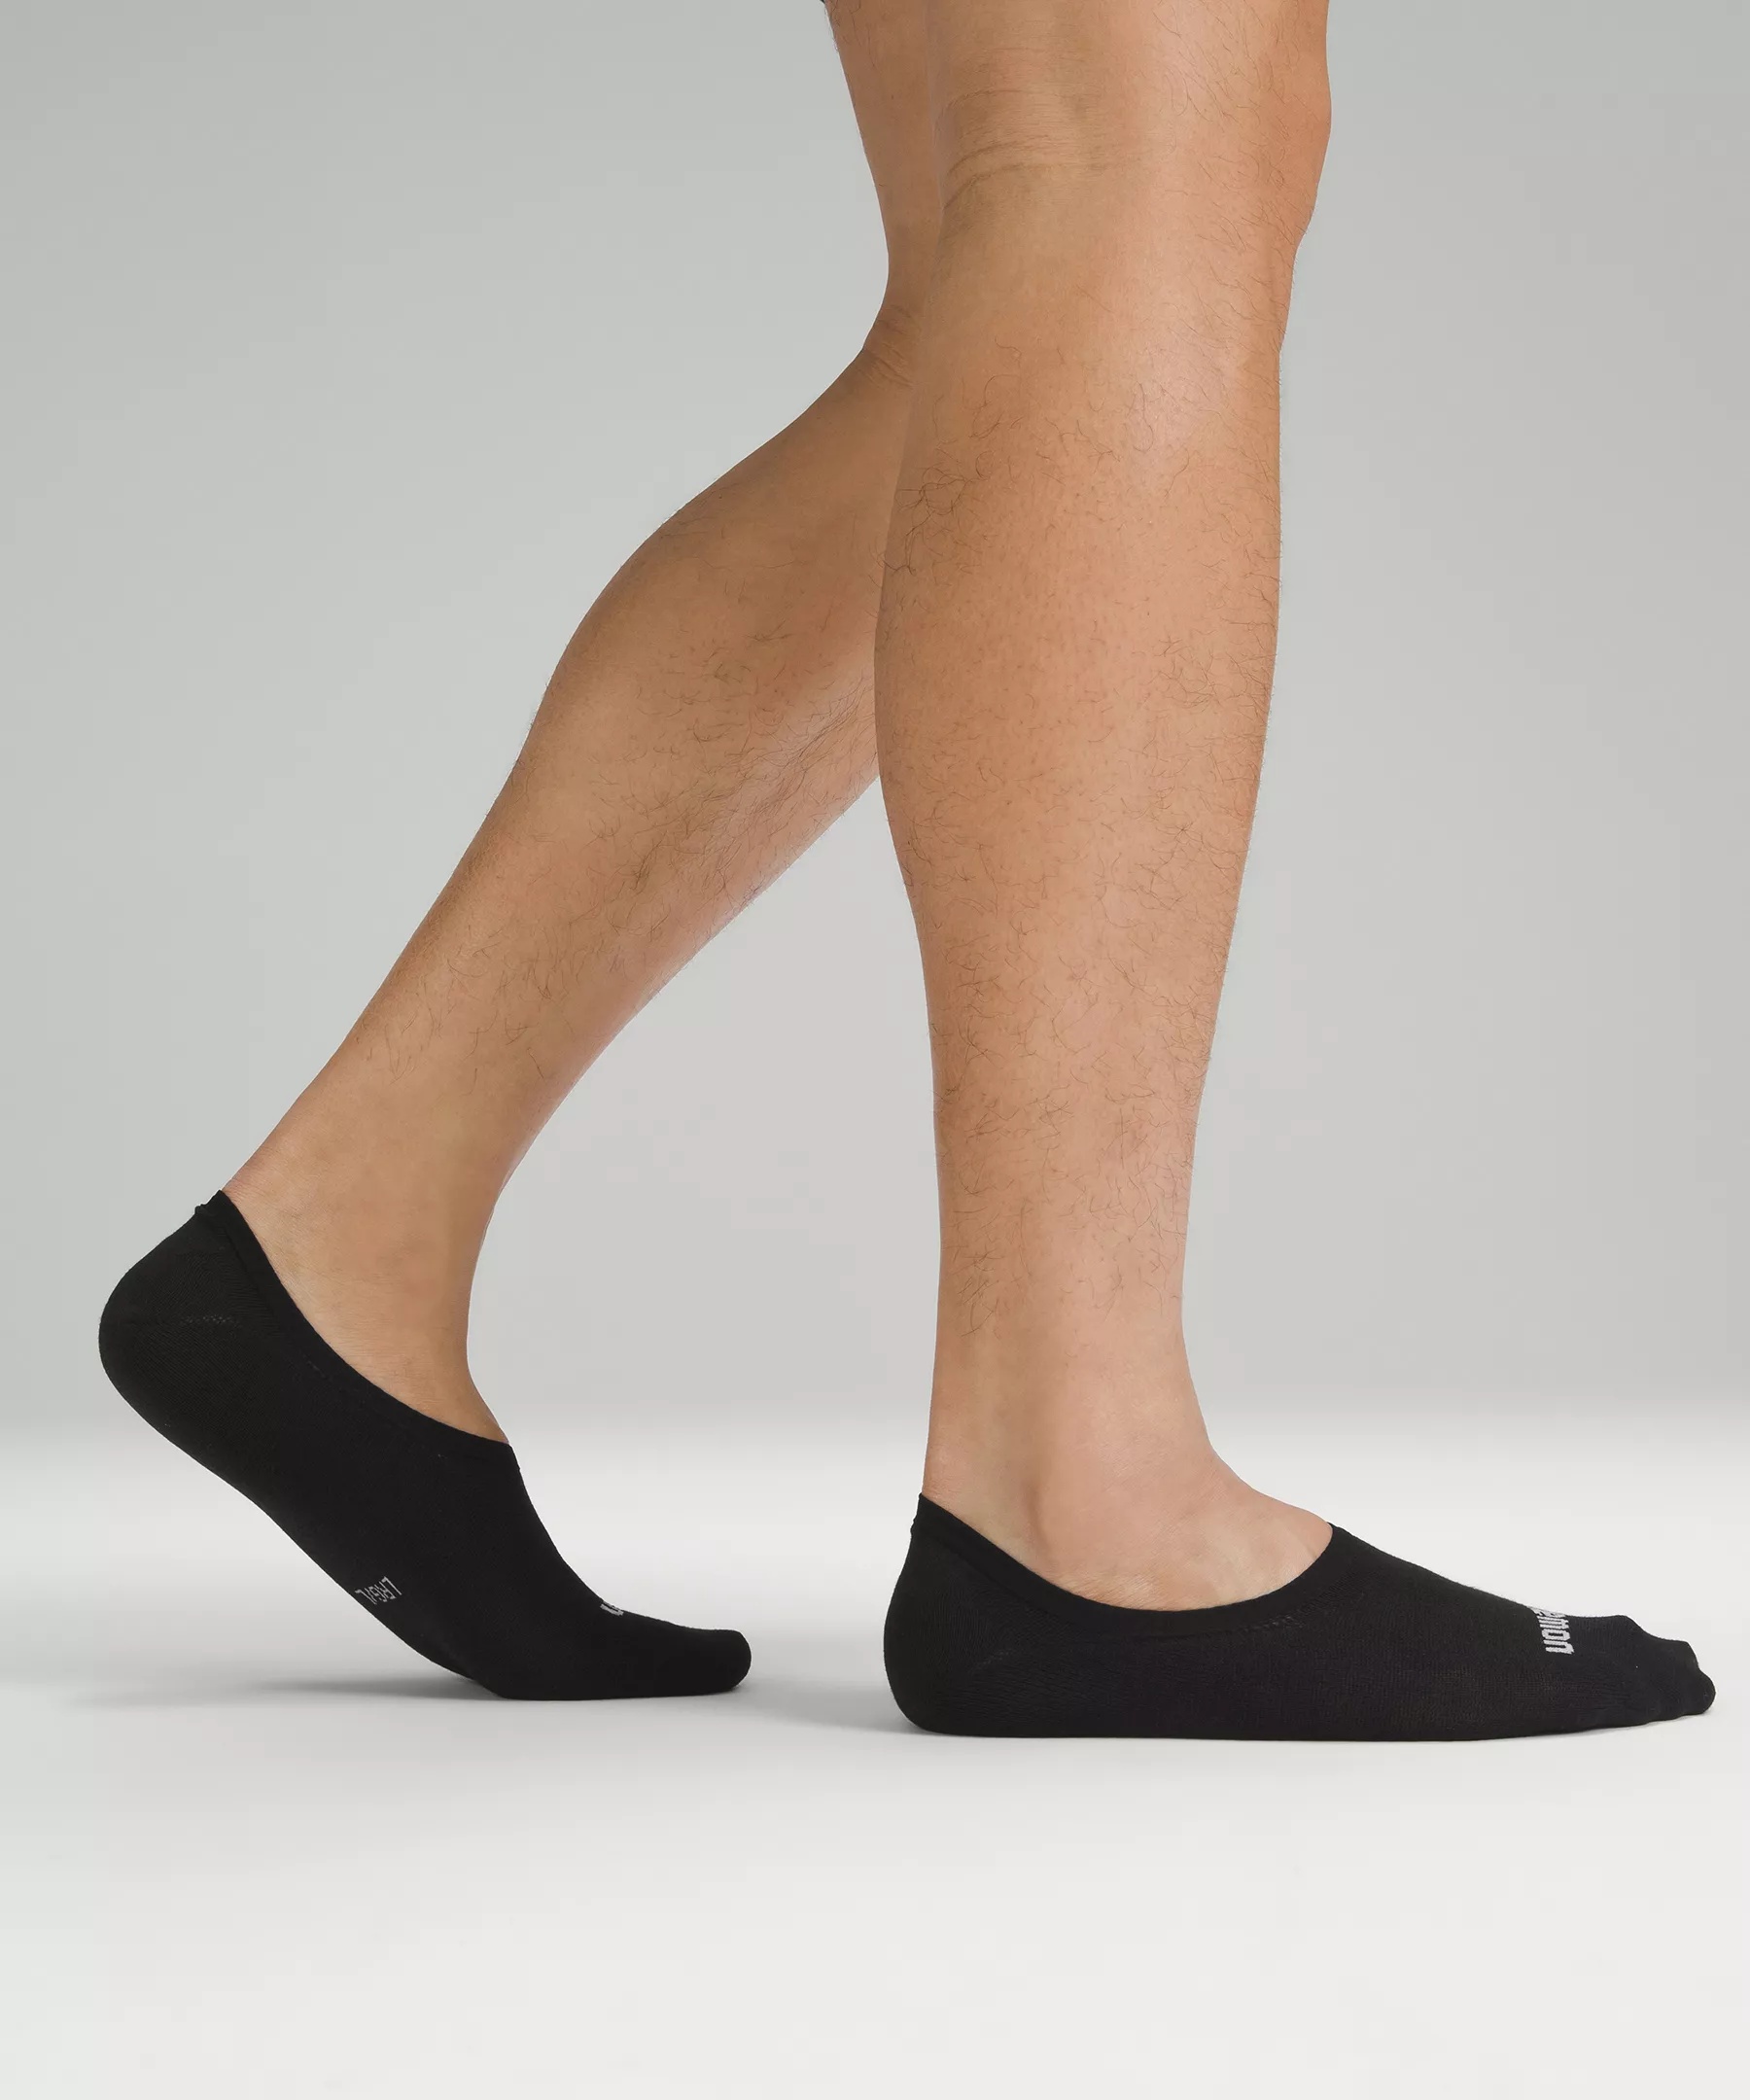 Men's Daily Stride Comfort No-Show Socks *3 Pack - 2